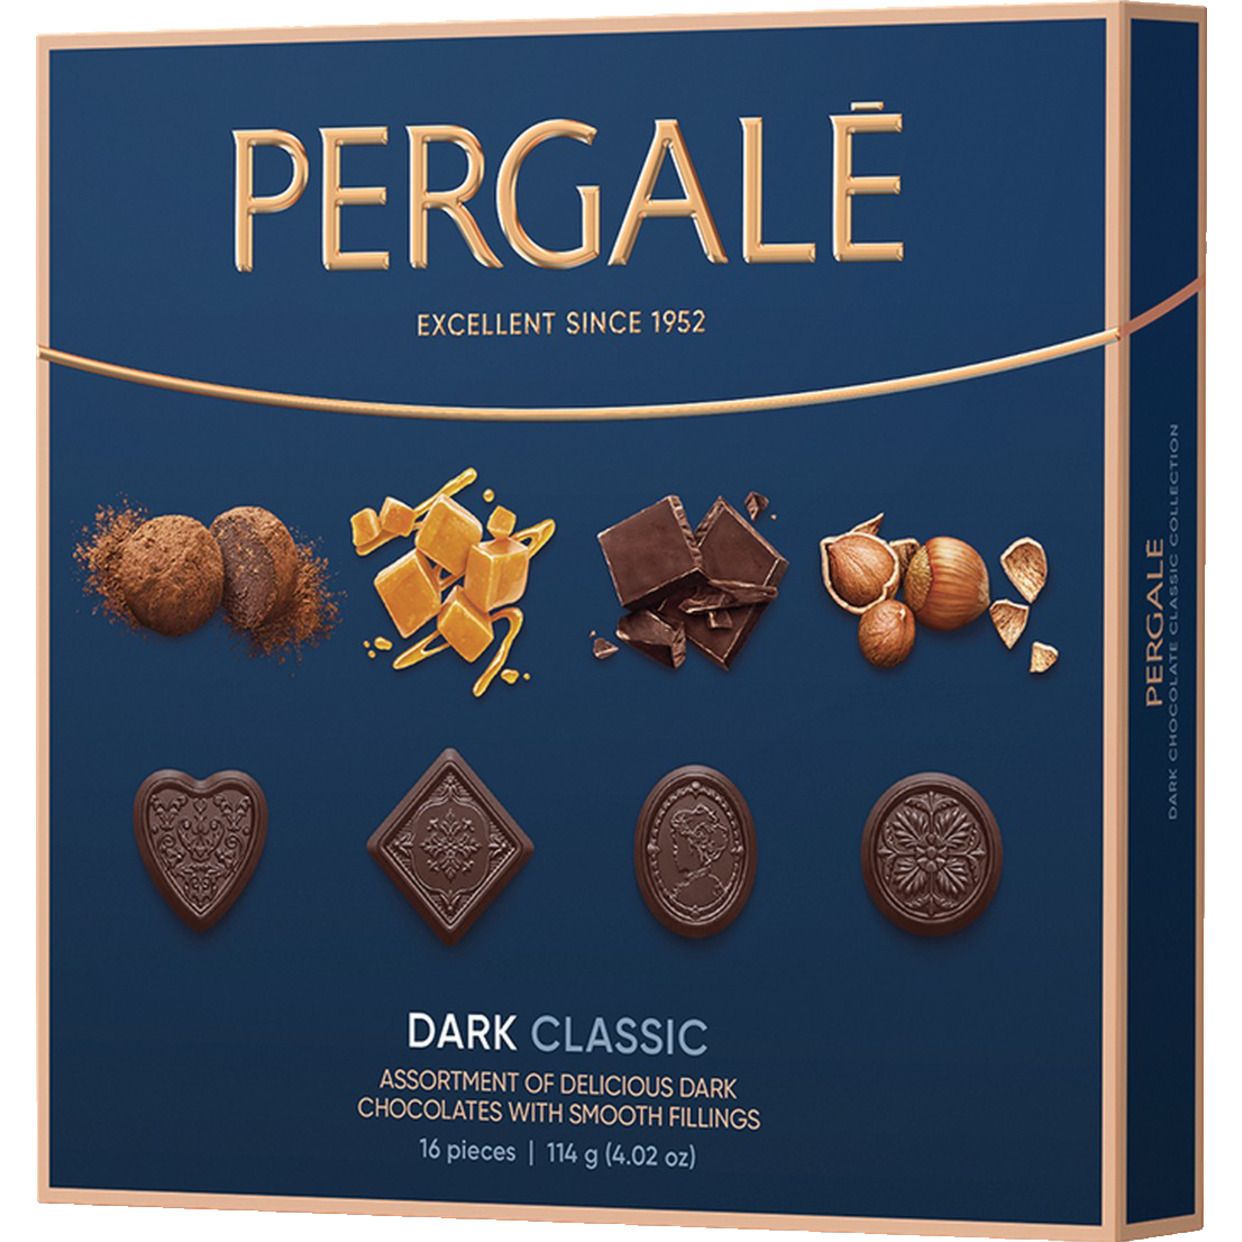 Набор конфет Pergale из темного шоколада 114г